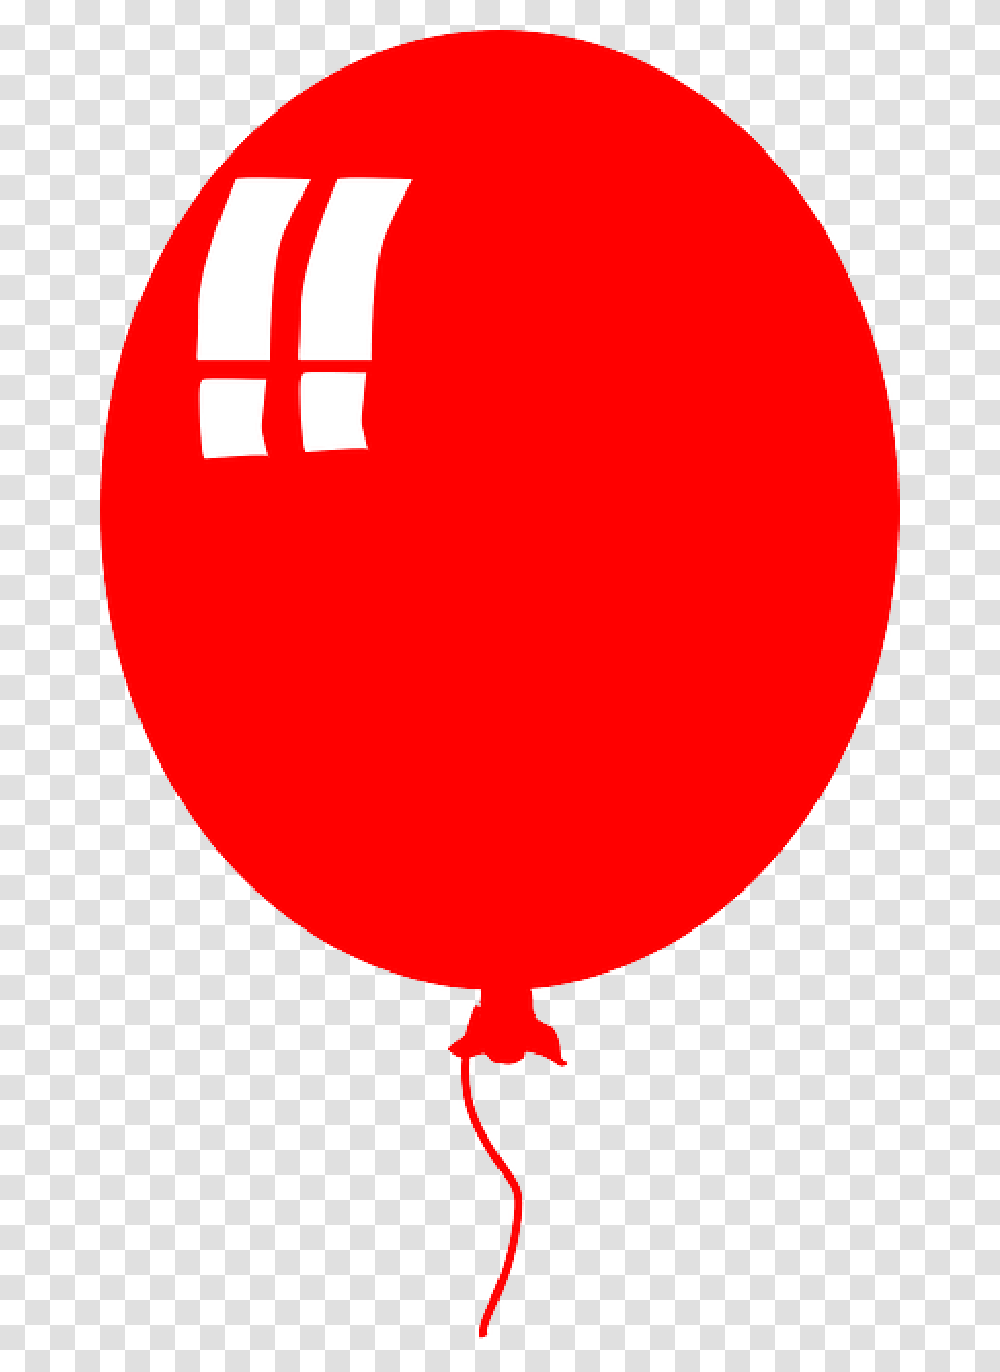 Red Kids Recreation Cartoon Party Balloon Helium Balloon Clip Art Transparent Png